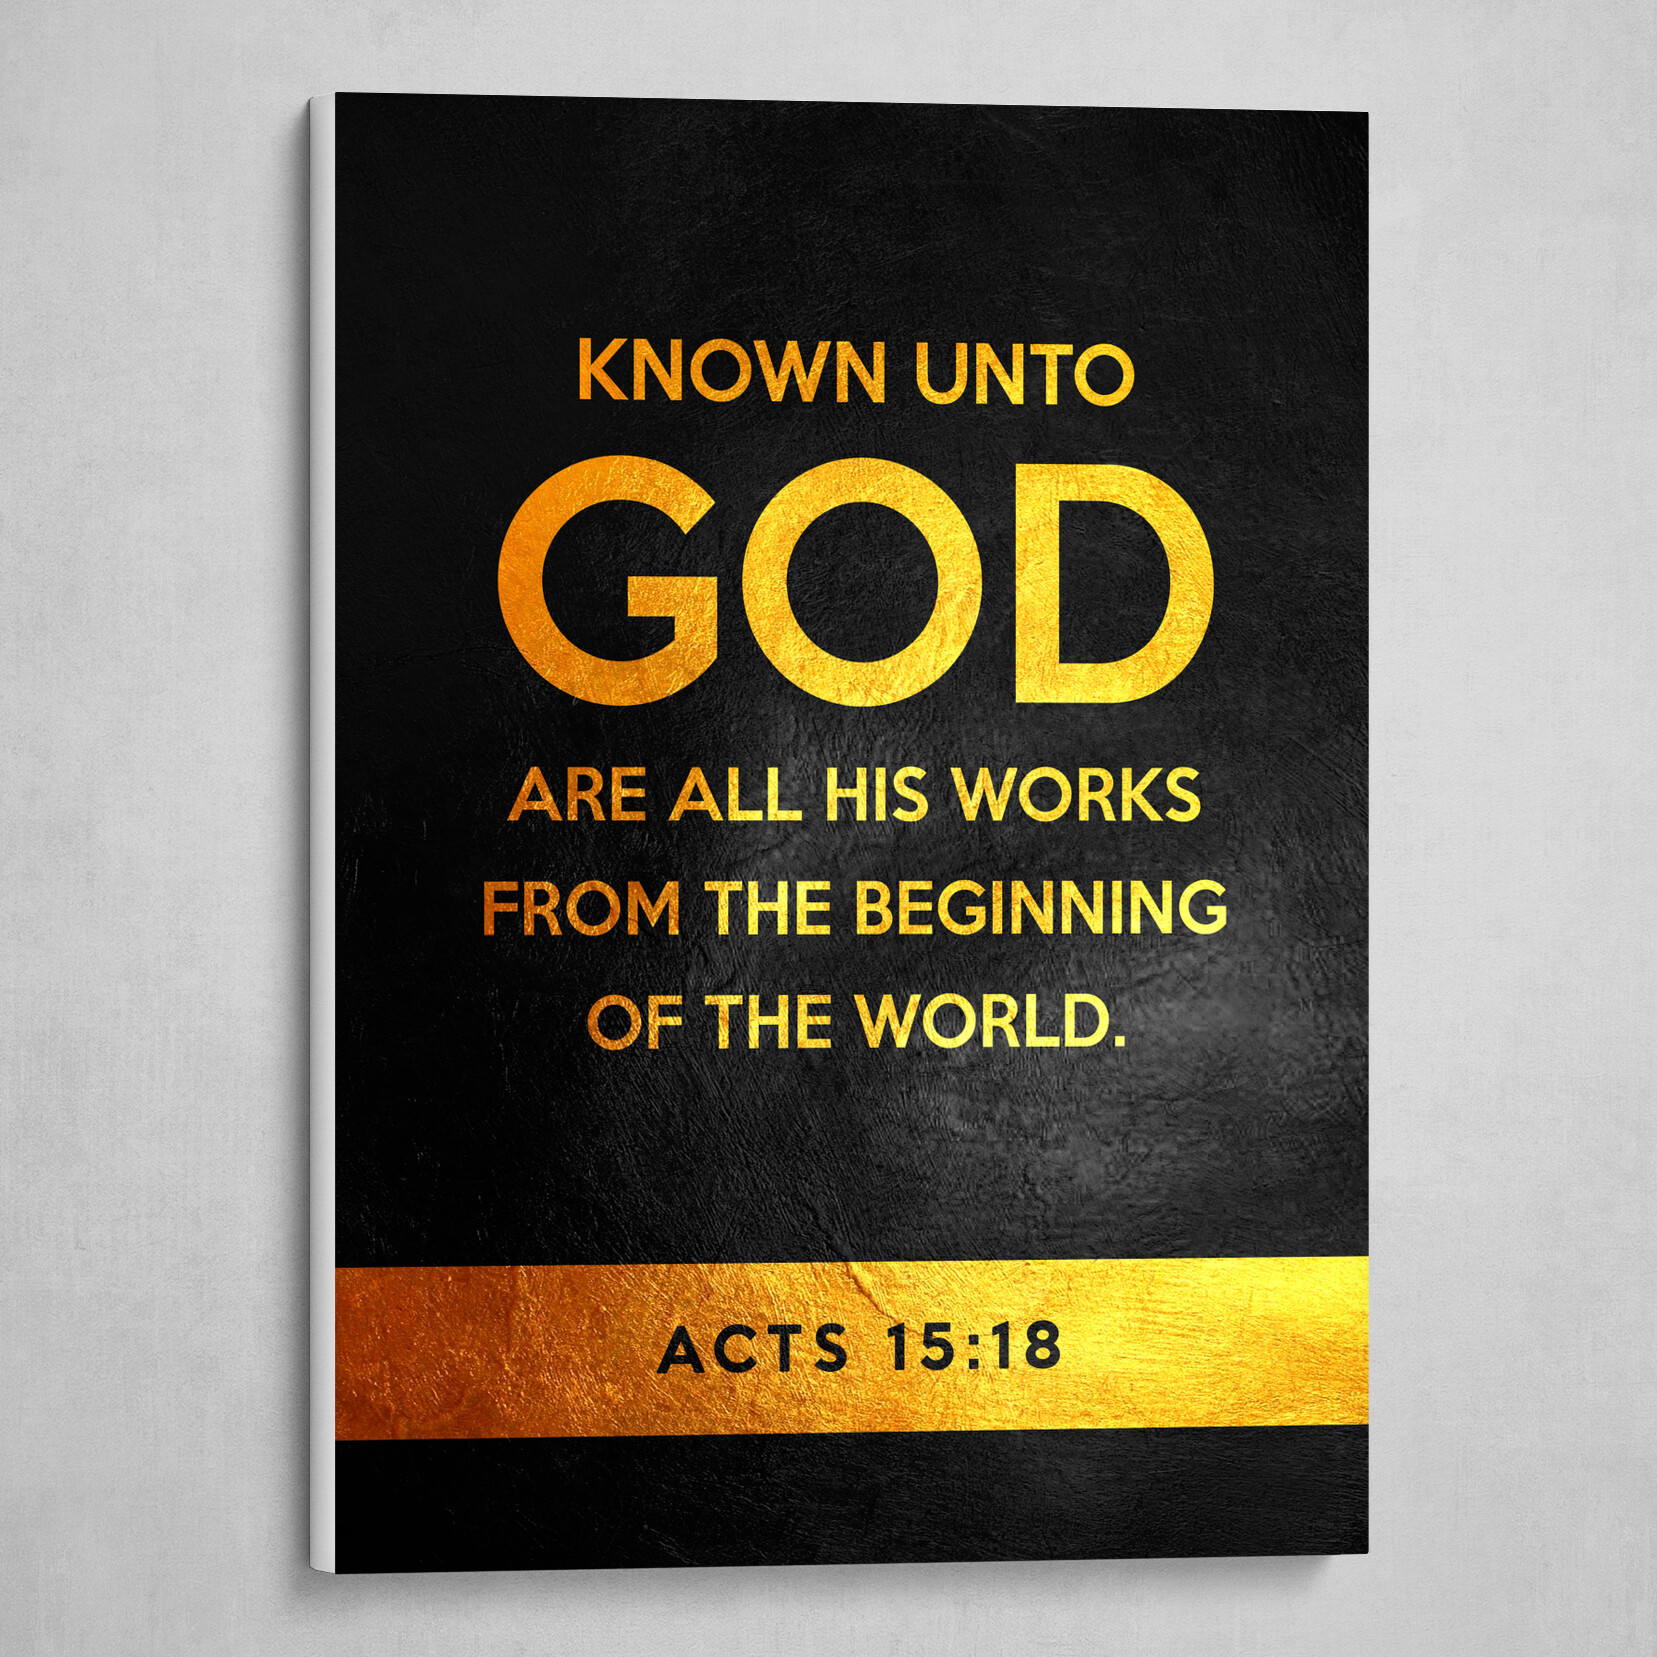 Acts 15:18 Bible Verse Text Art